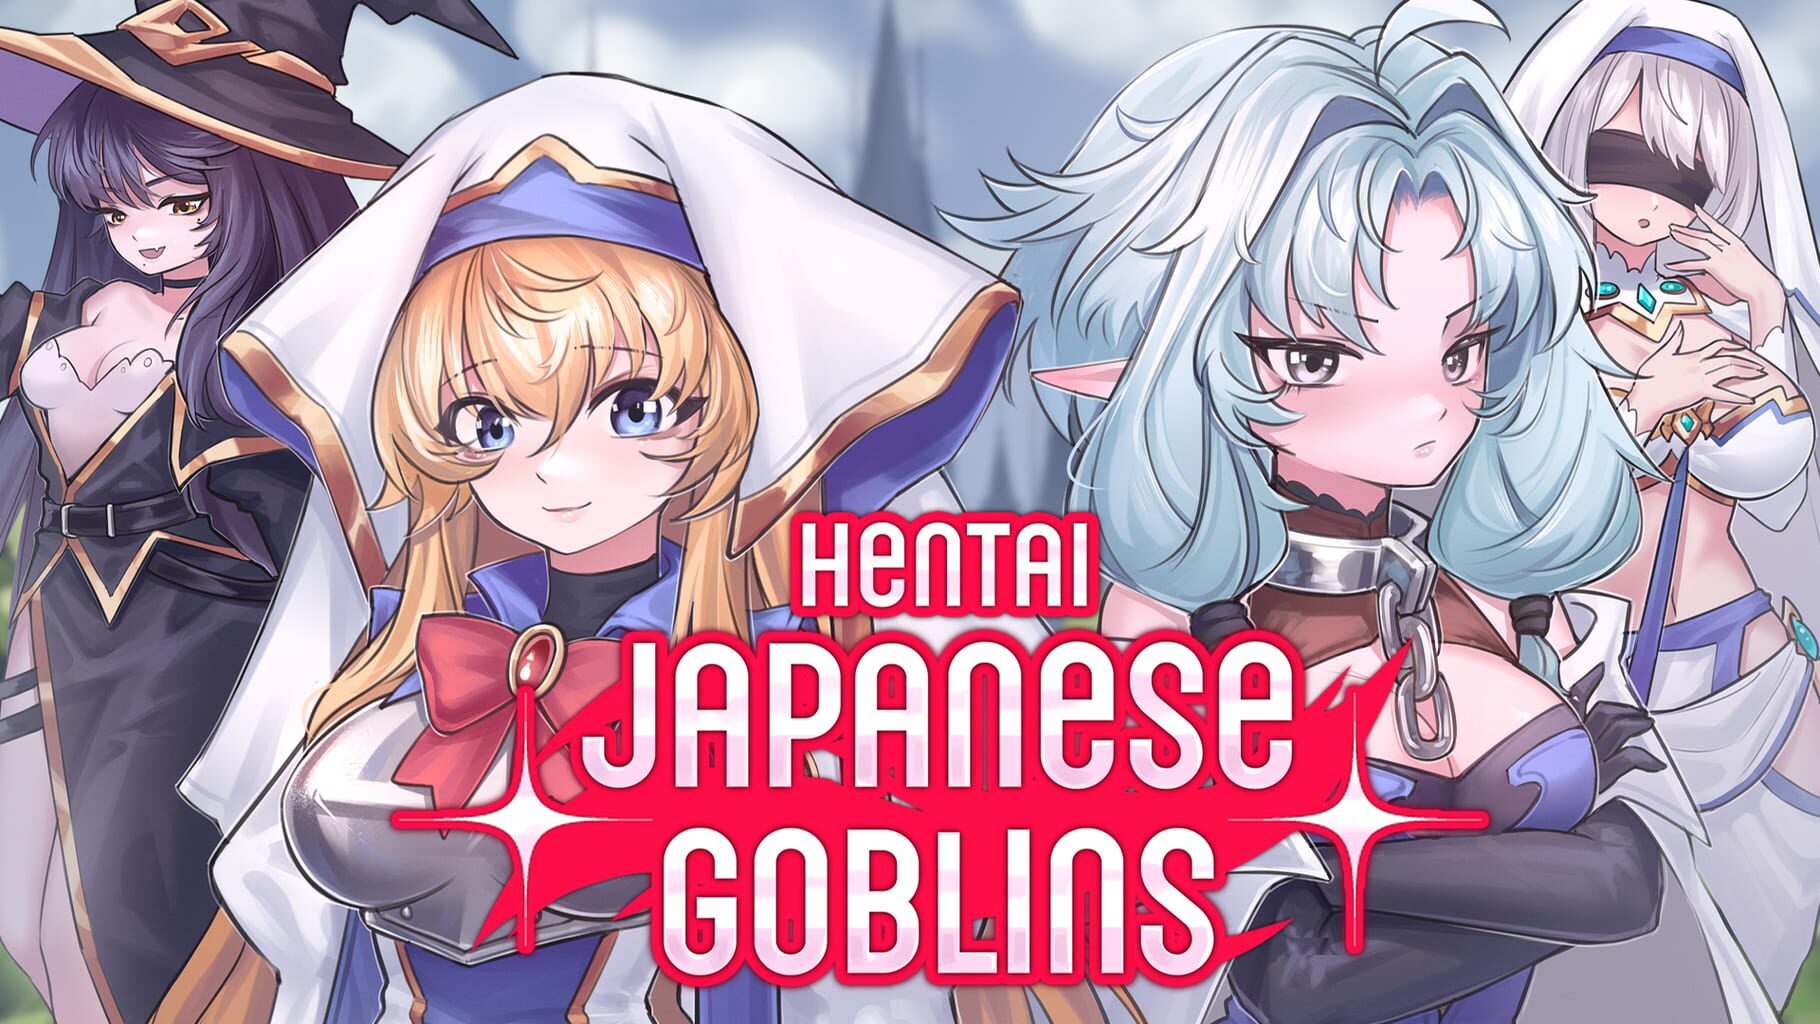 Hentai: Japanese Goblins artwork